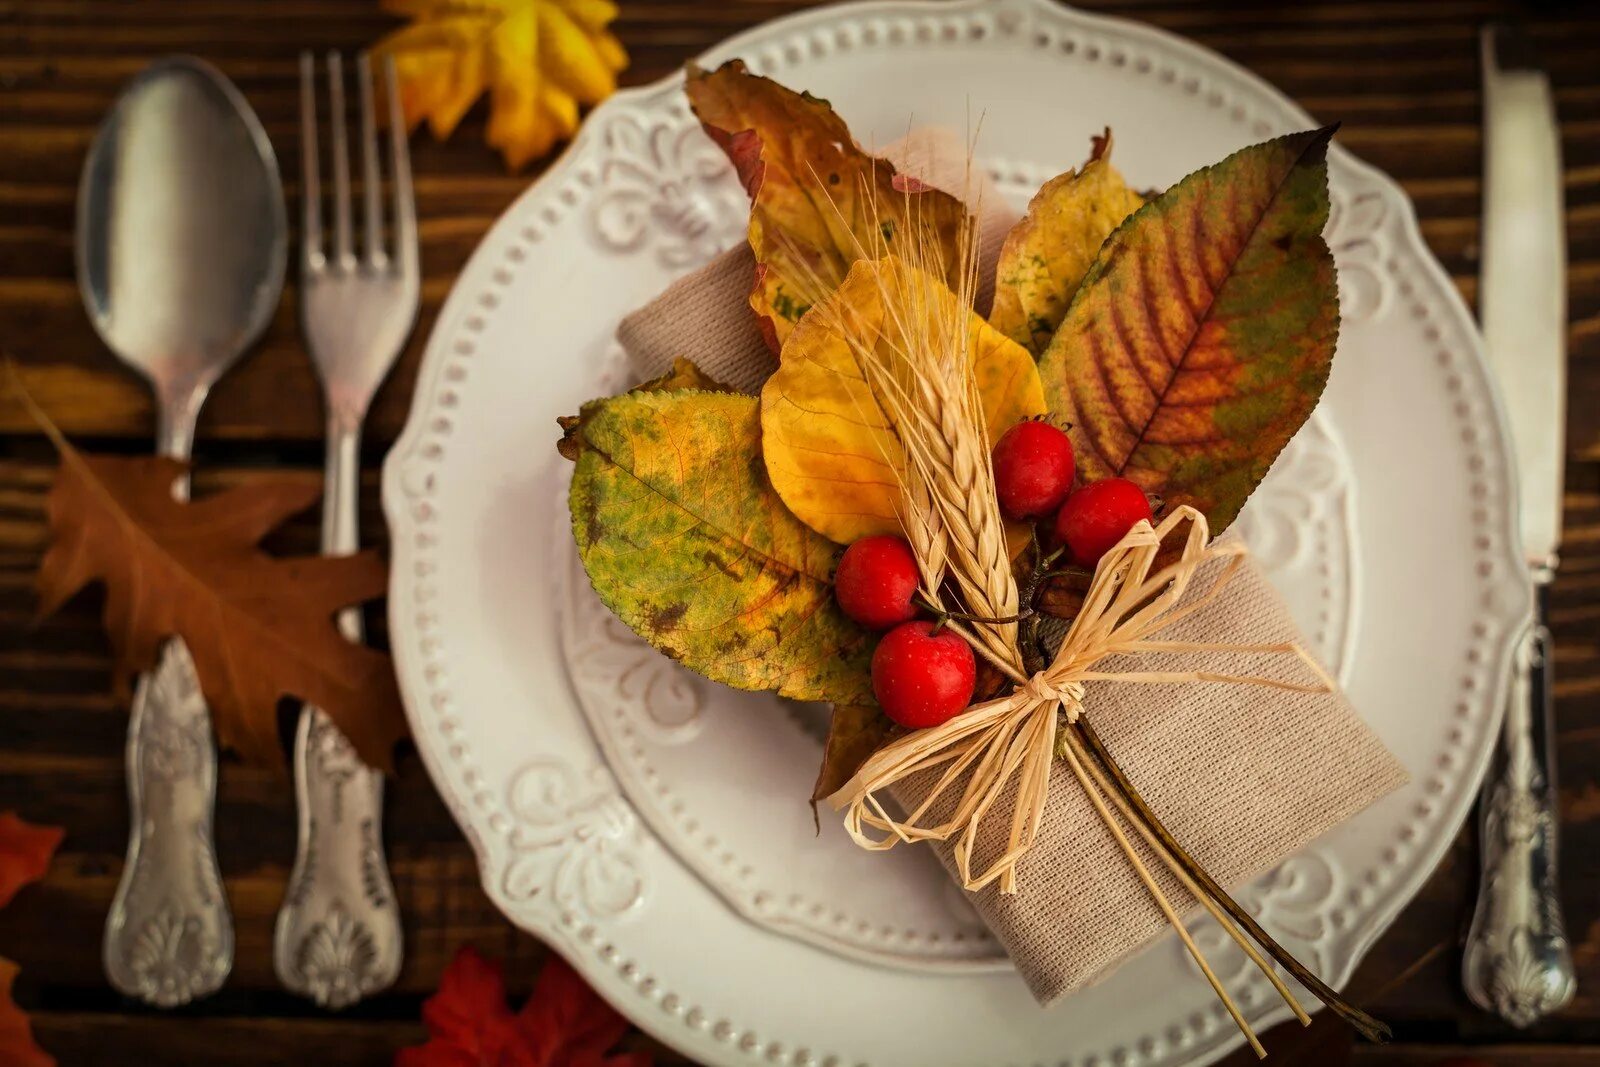 Сервировка стола осенняя тематика. Сервировка стола в стиле осень. Осенний ужин. Красивая сервировка стола посуда осенняя тематика.